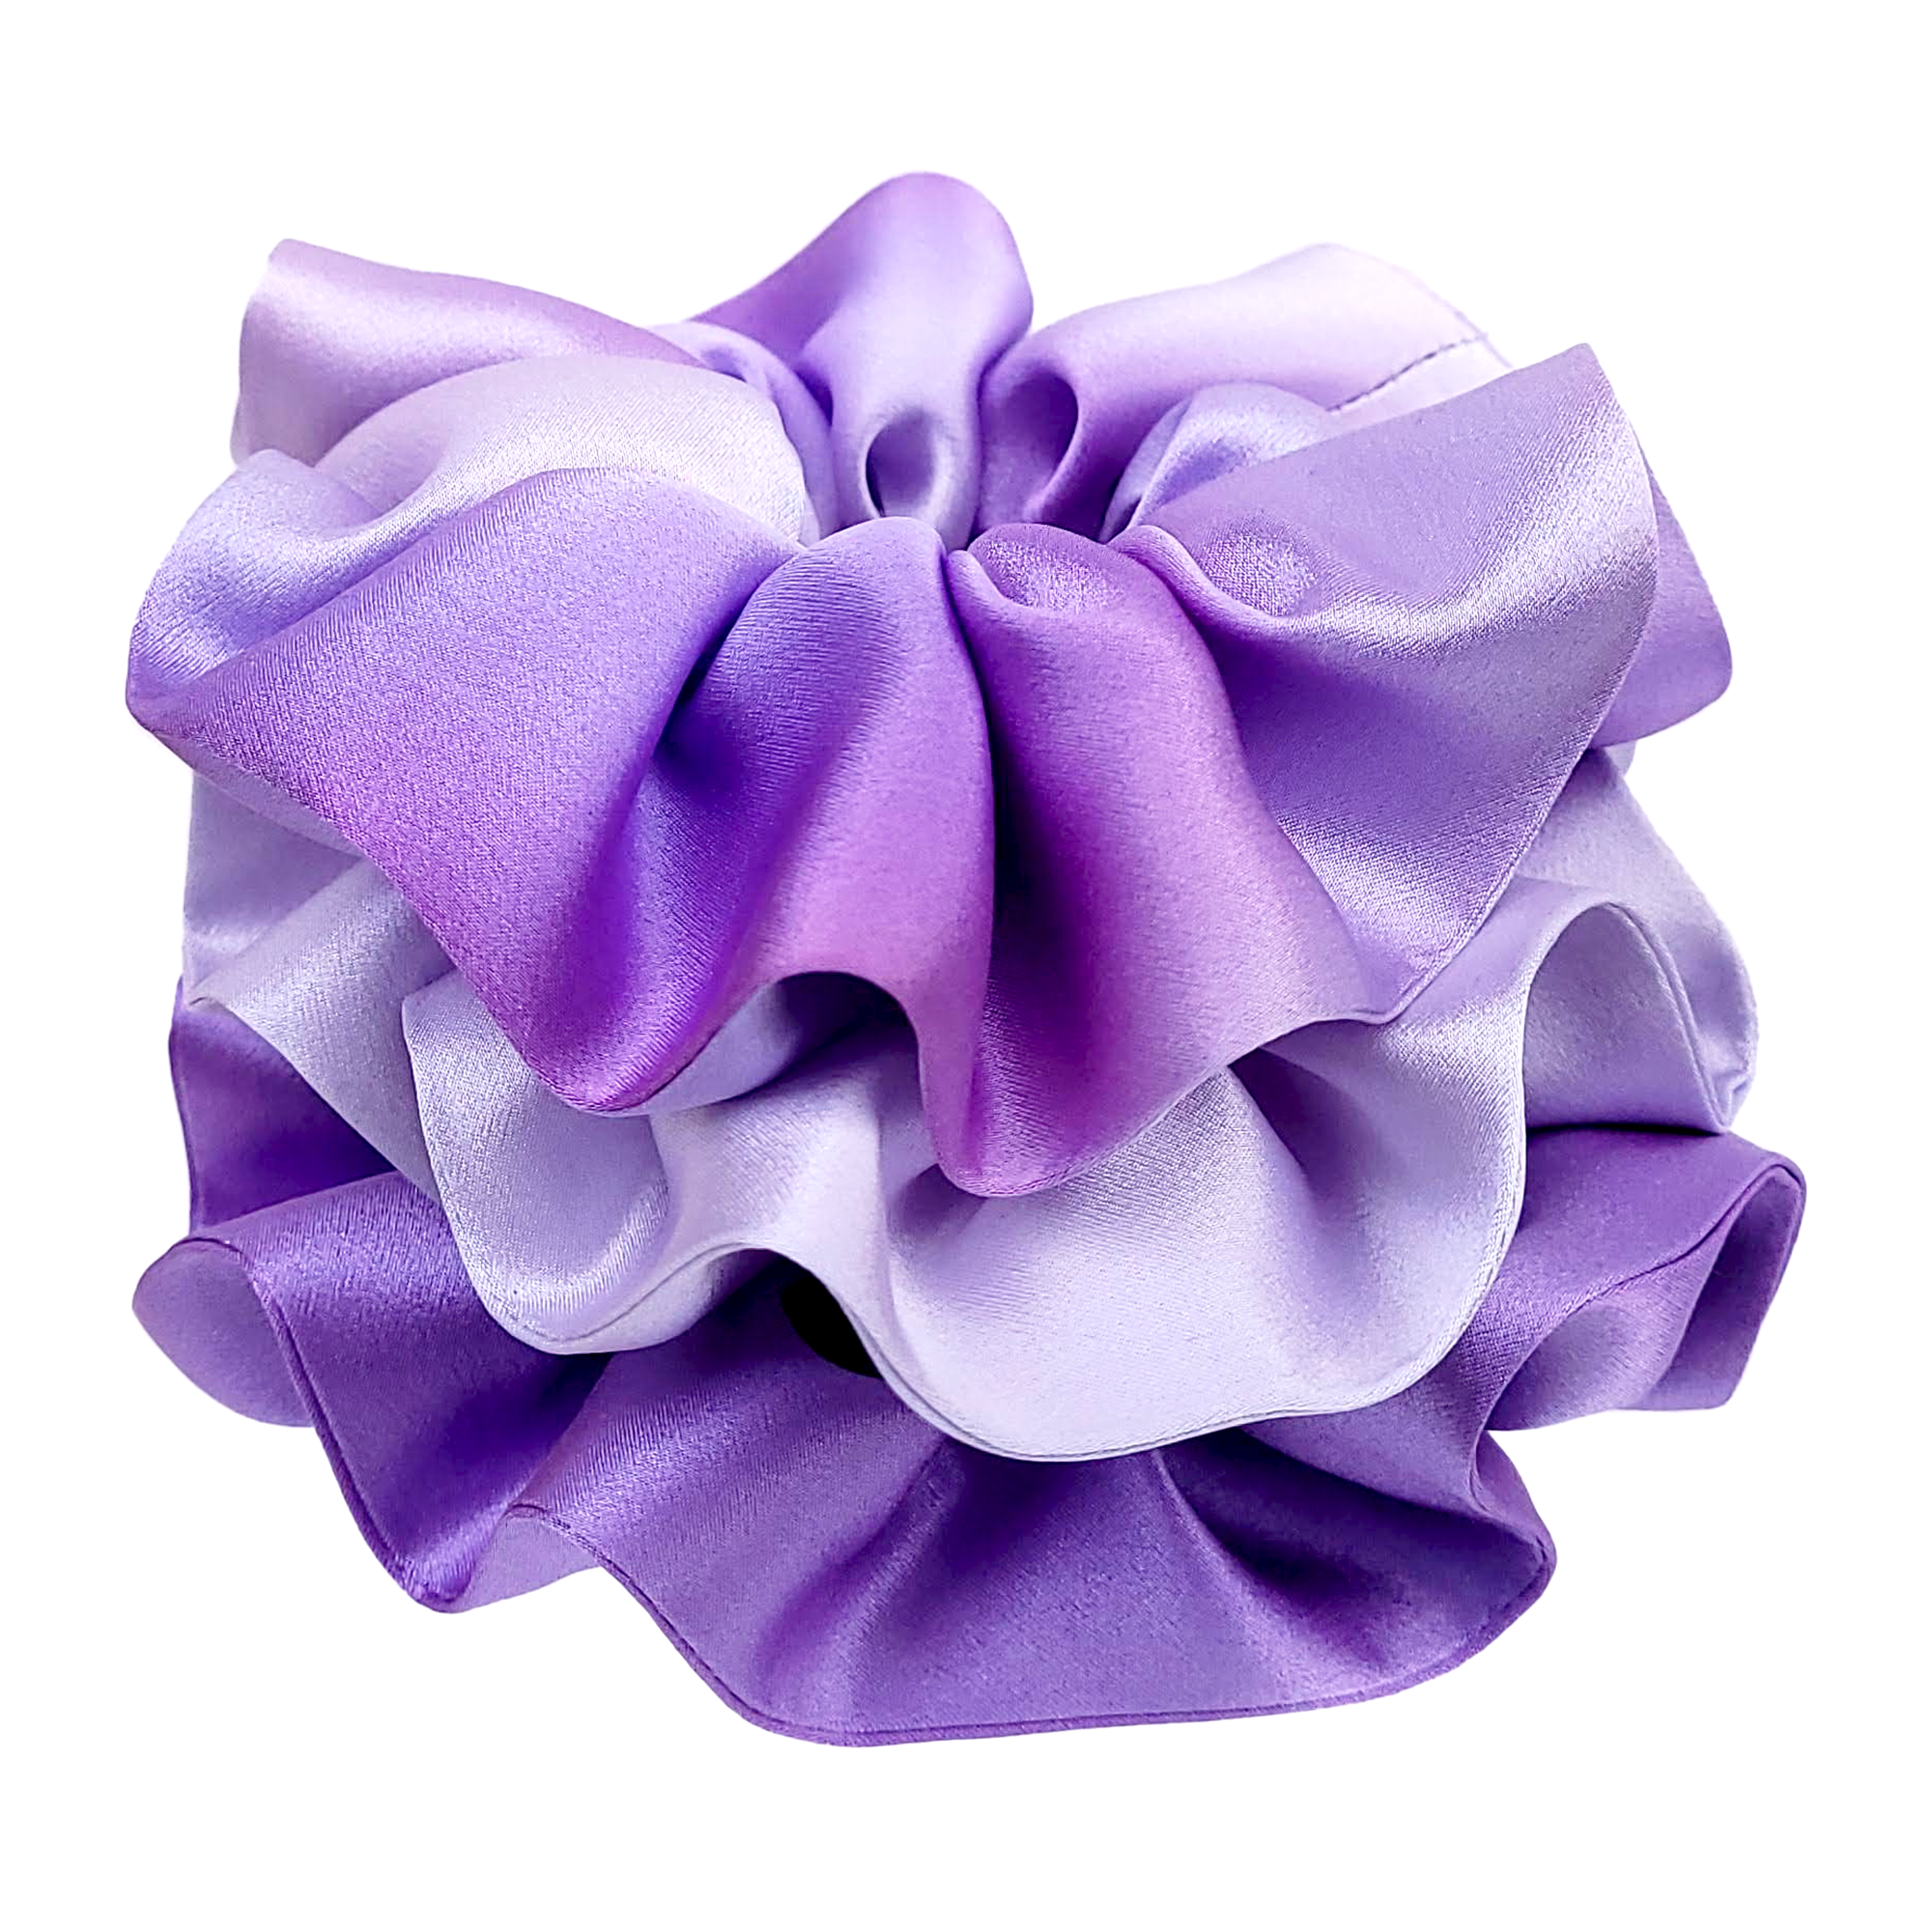 pure silk medium size scrunchie hair accessory pony tail holders hand dyed mauve purple colors handmade by Lynne Kiel